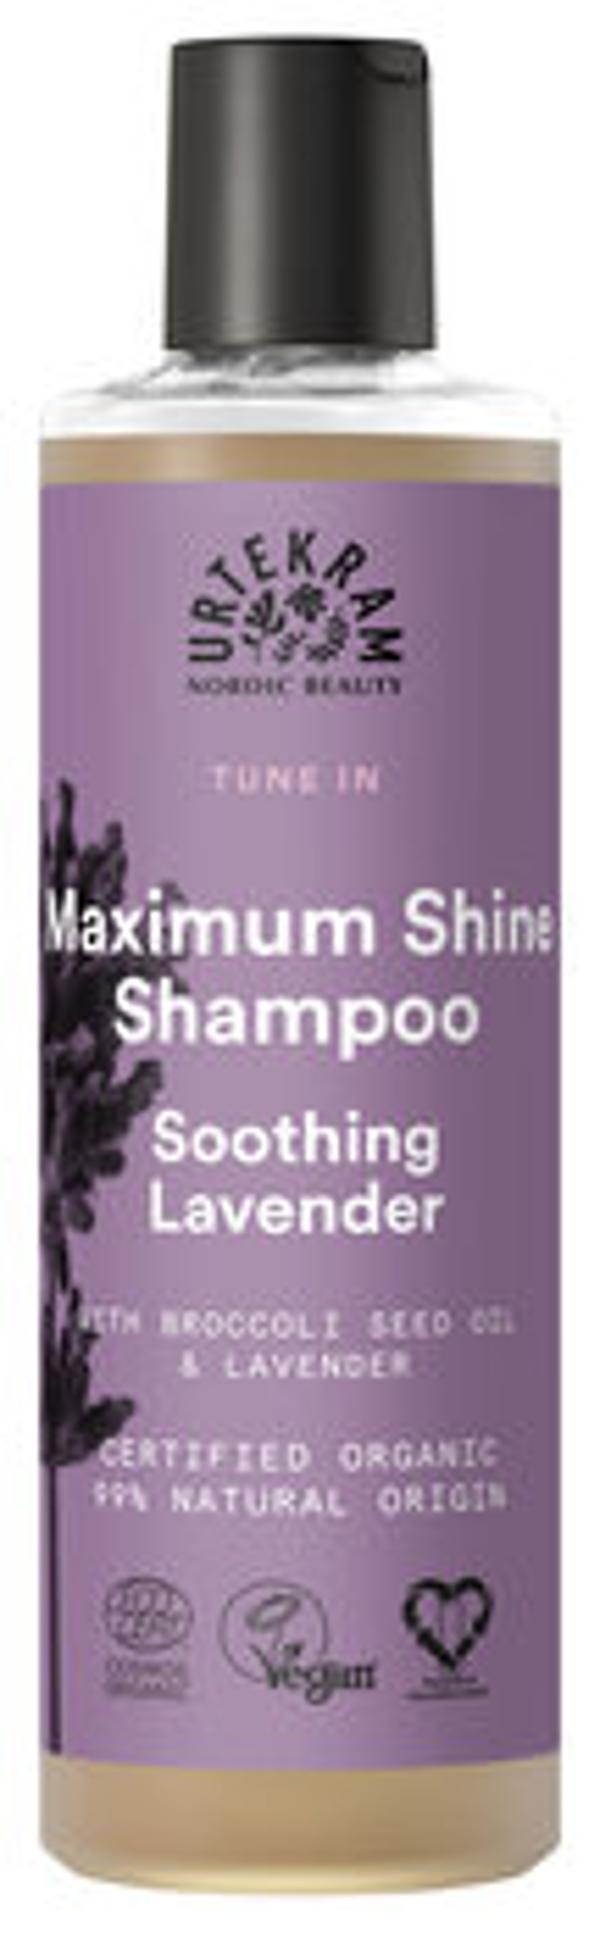 Produktfoto zu Maximum Shine Shampoo "Soothing Lavender" 250 ml